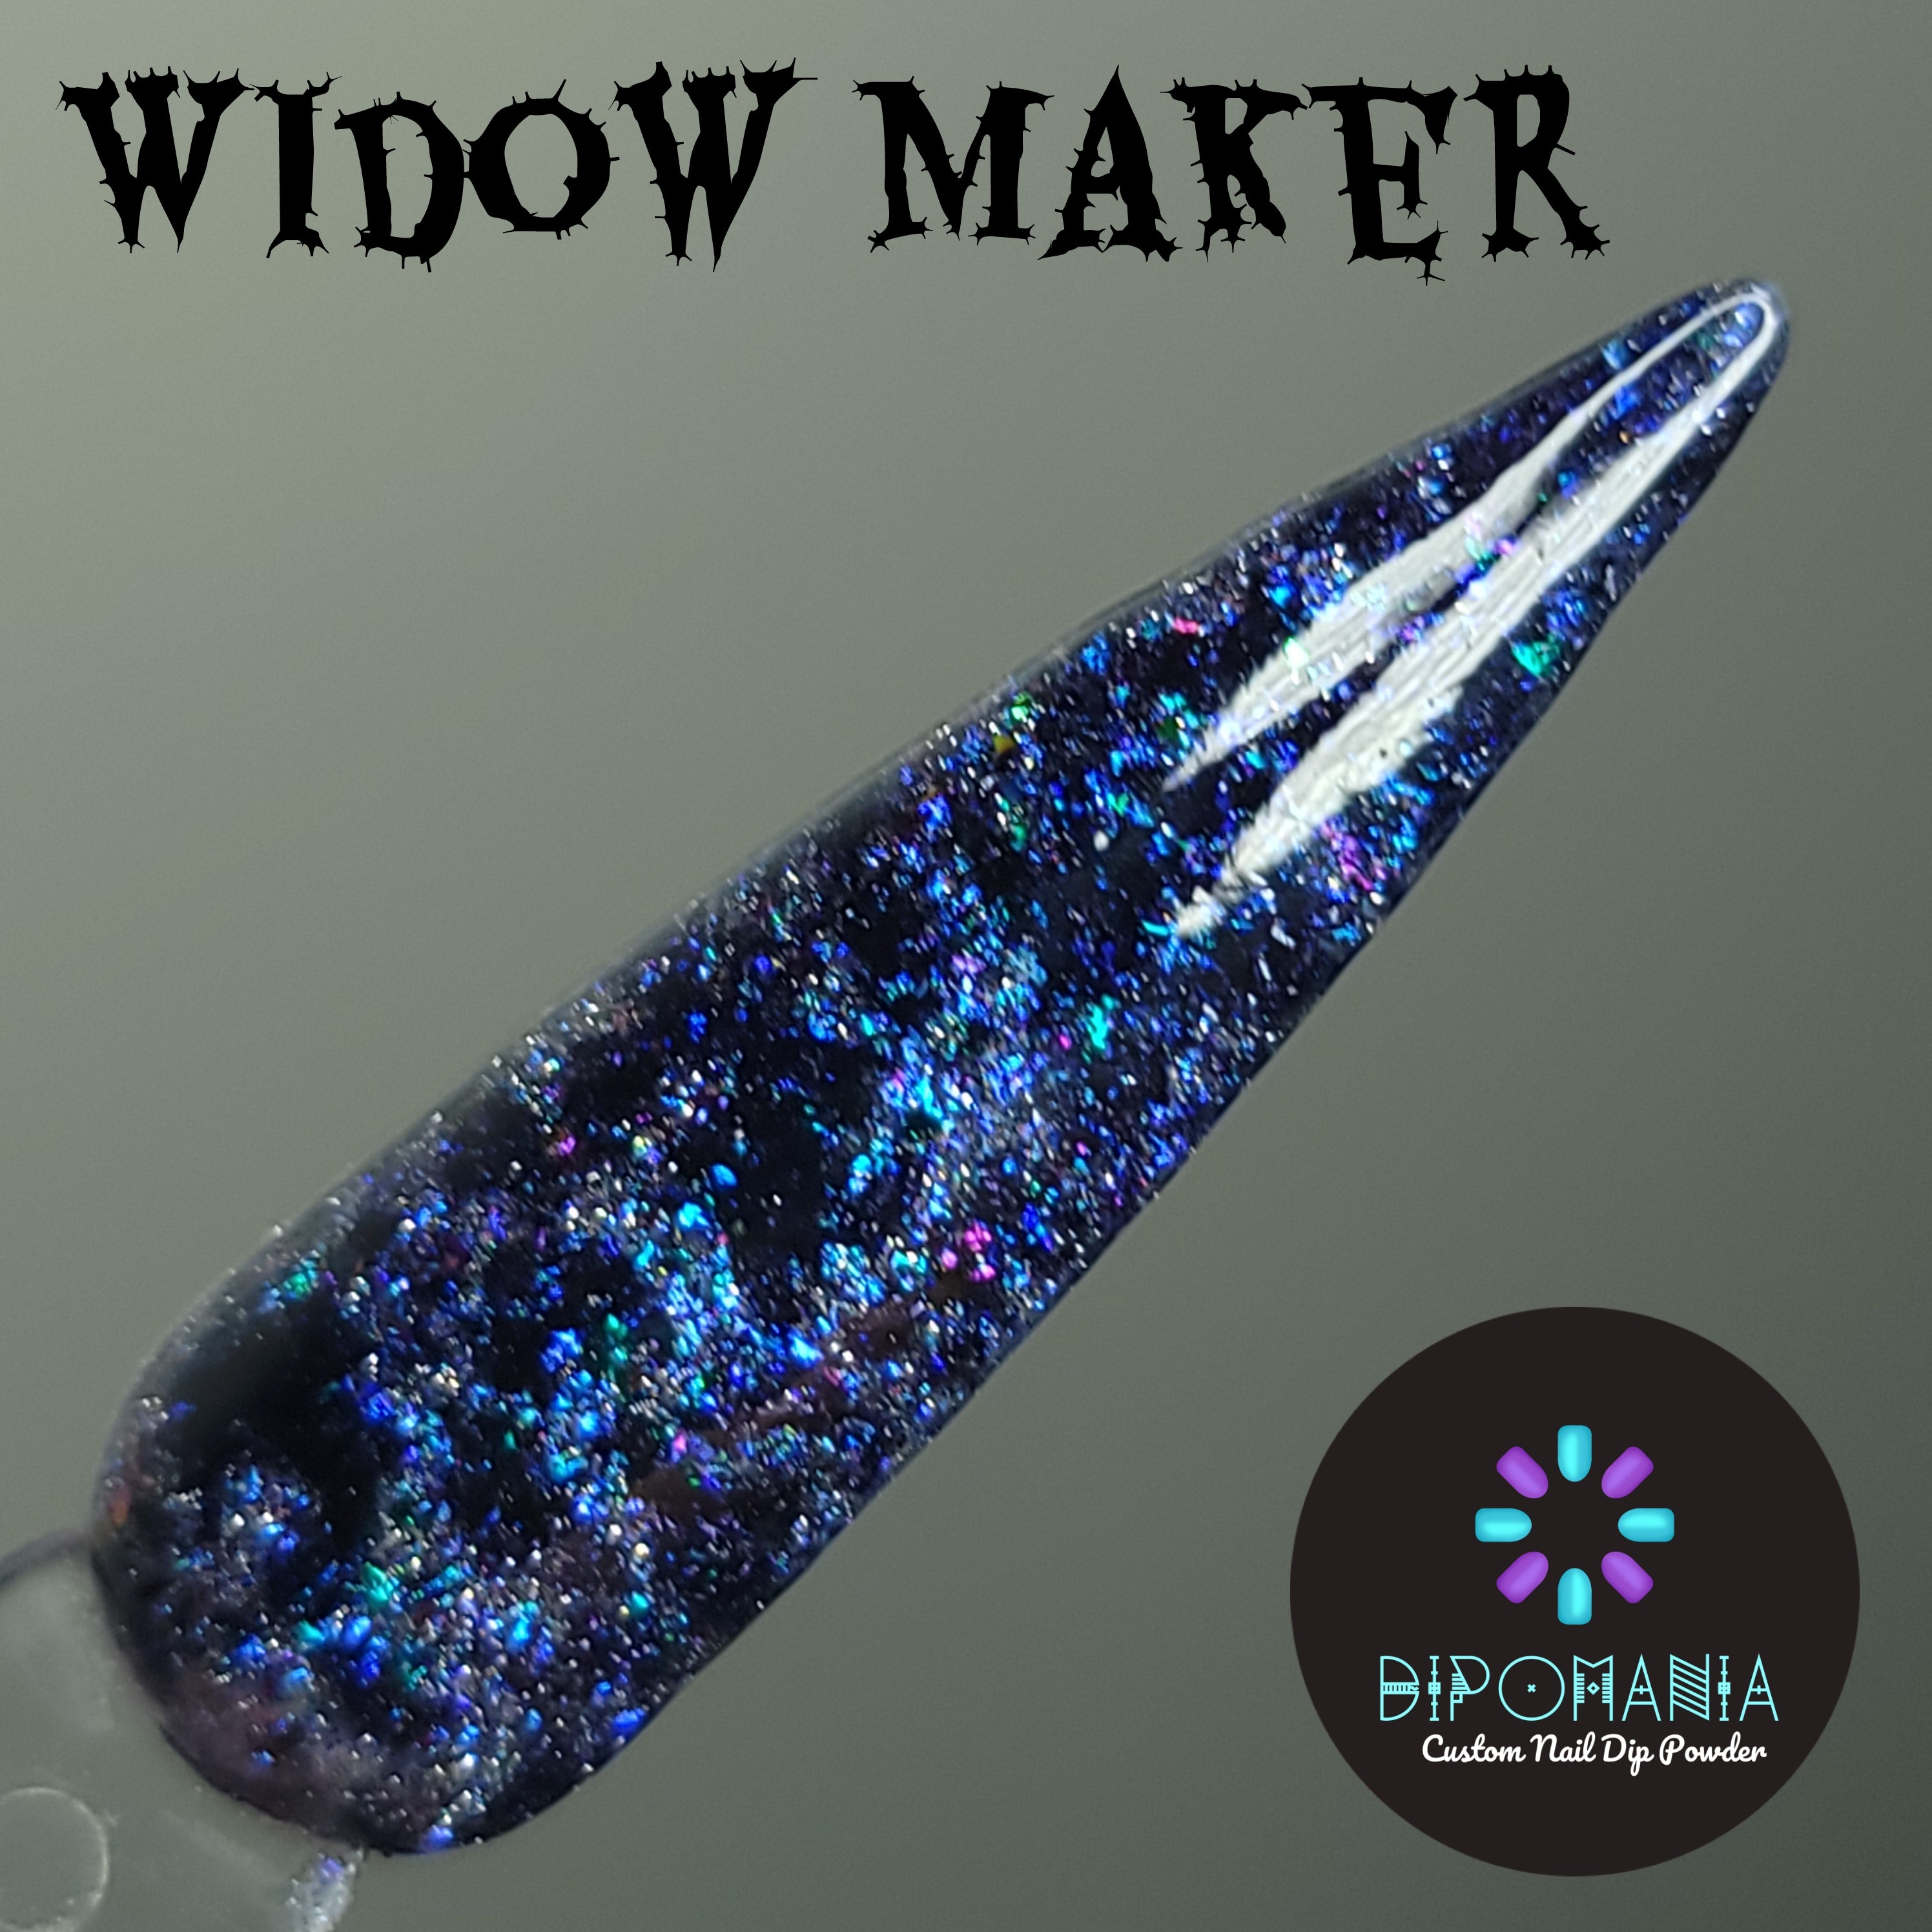 Widow Maker – Dipomania